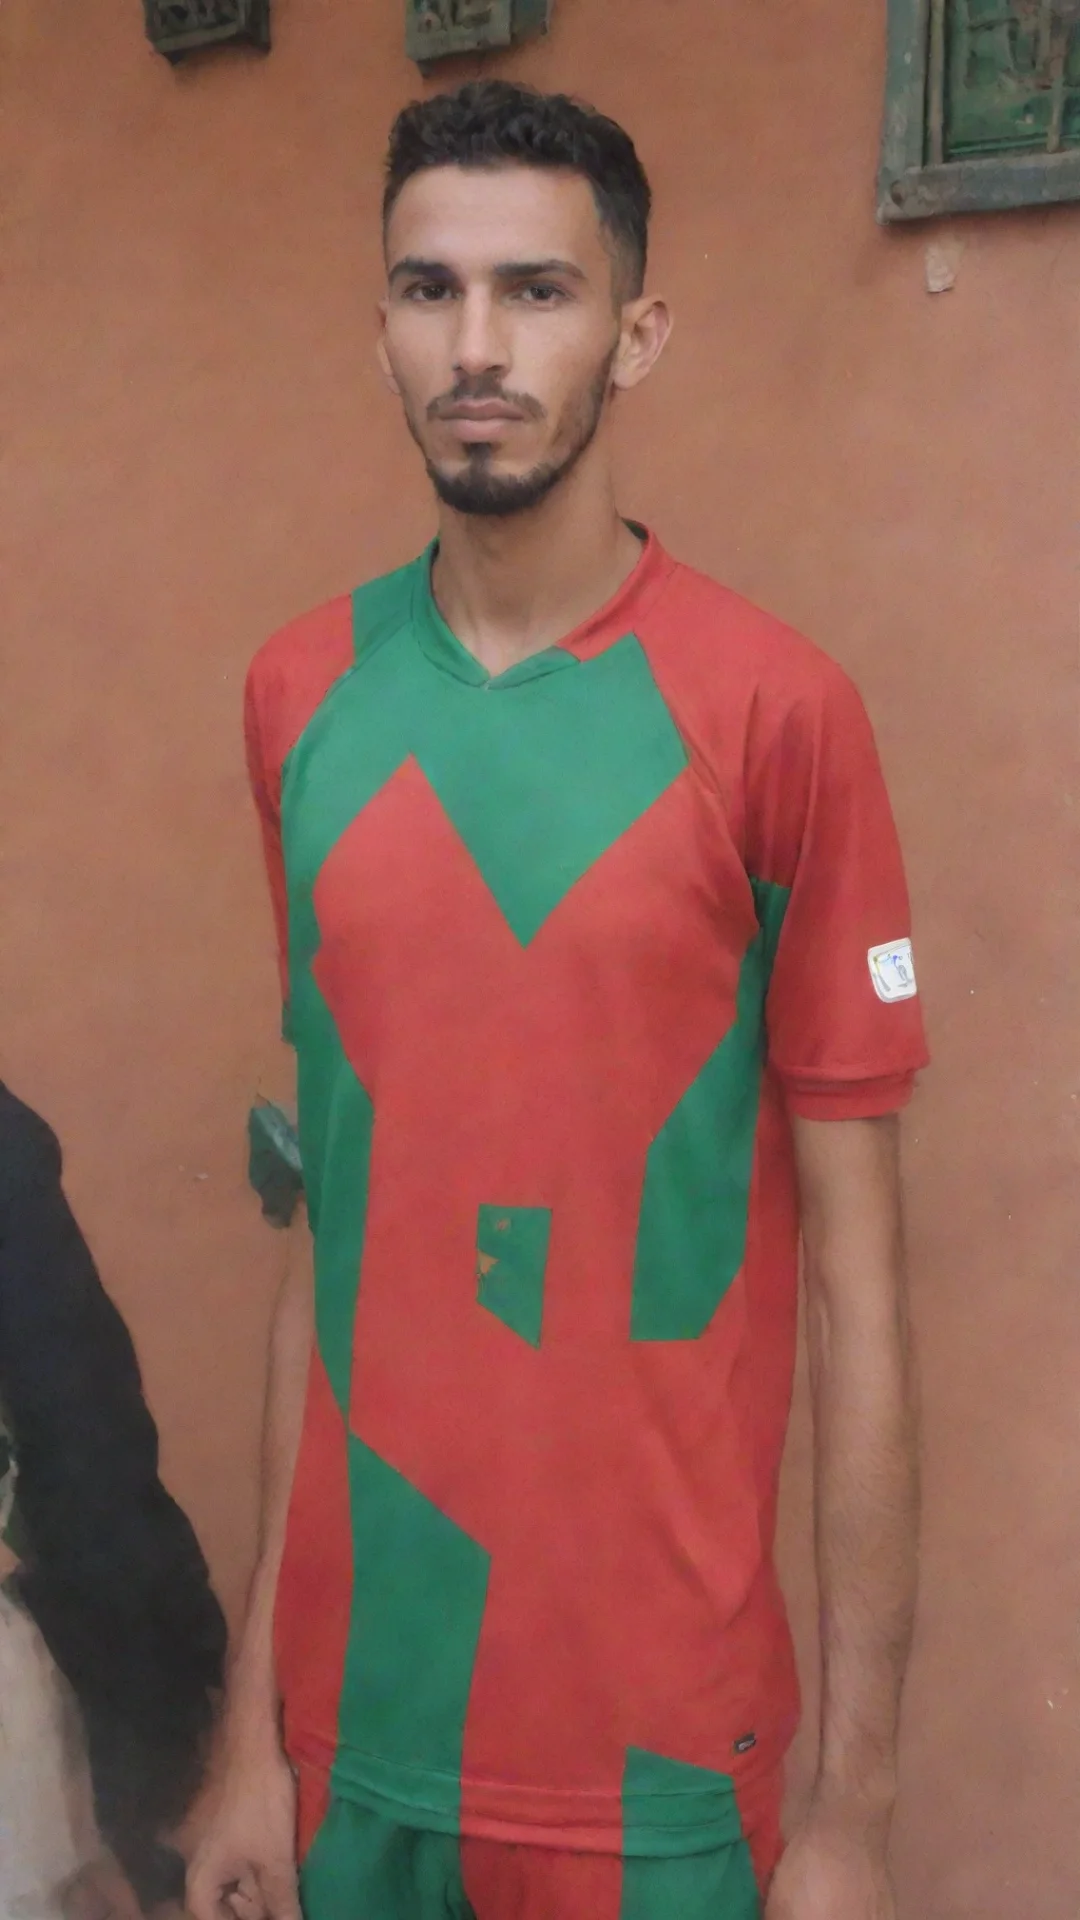 aia man wear a morocco team jerseys  tall